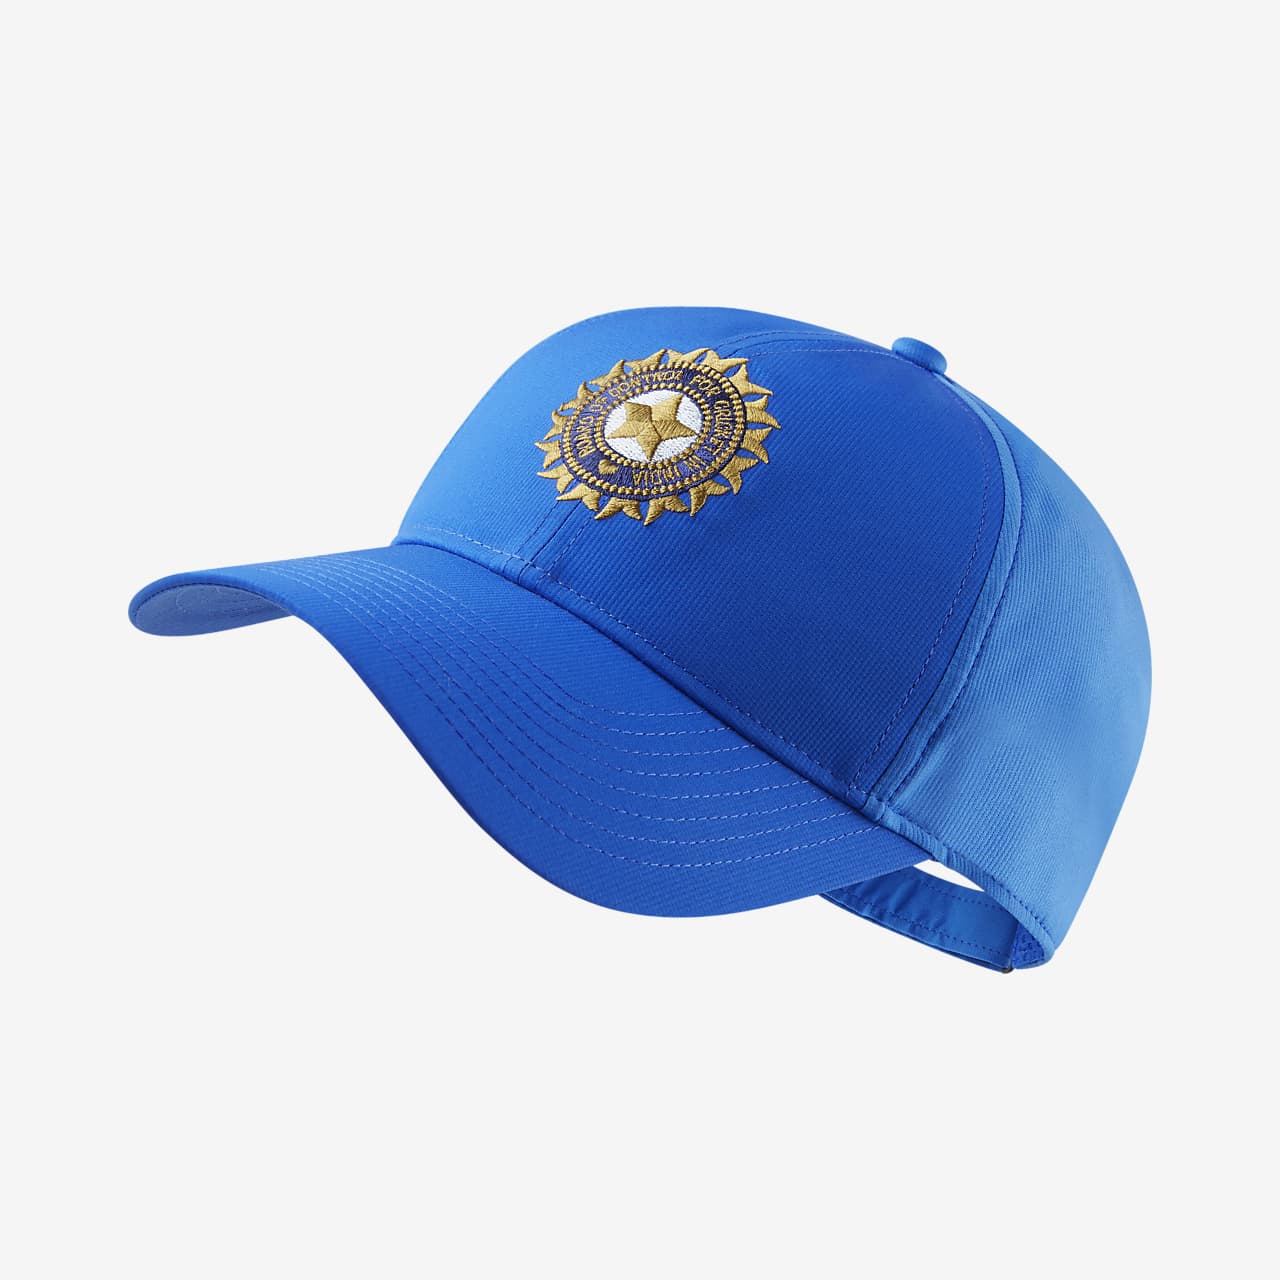 nike caps india cricket team